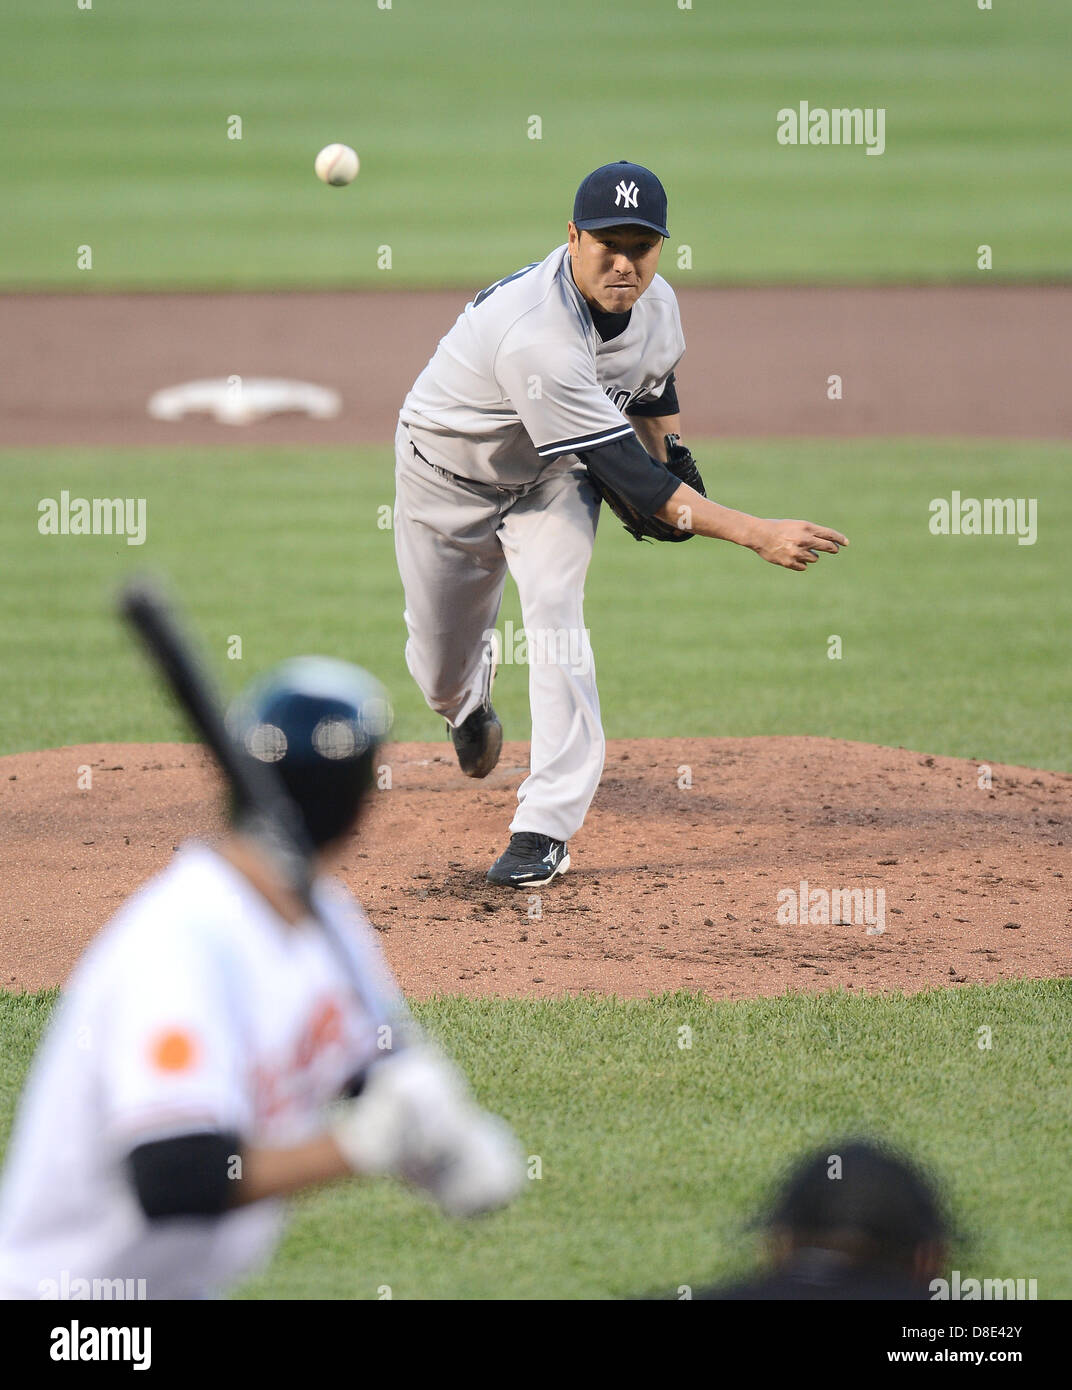 Hiroki Kuroda (Yankee), le 22 mai 2013 - MLB : Hiroki Kuroda des New York Yankees emplacements pendant la partie de baseball contre les Orioles de Baltimore à l'Oriole Park at Camden Yards de Baltimore, Maryland, United States. (Photo de bla) Banque D'Images